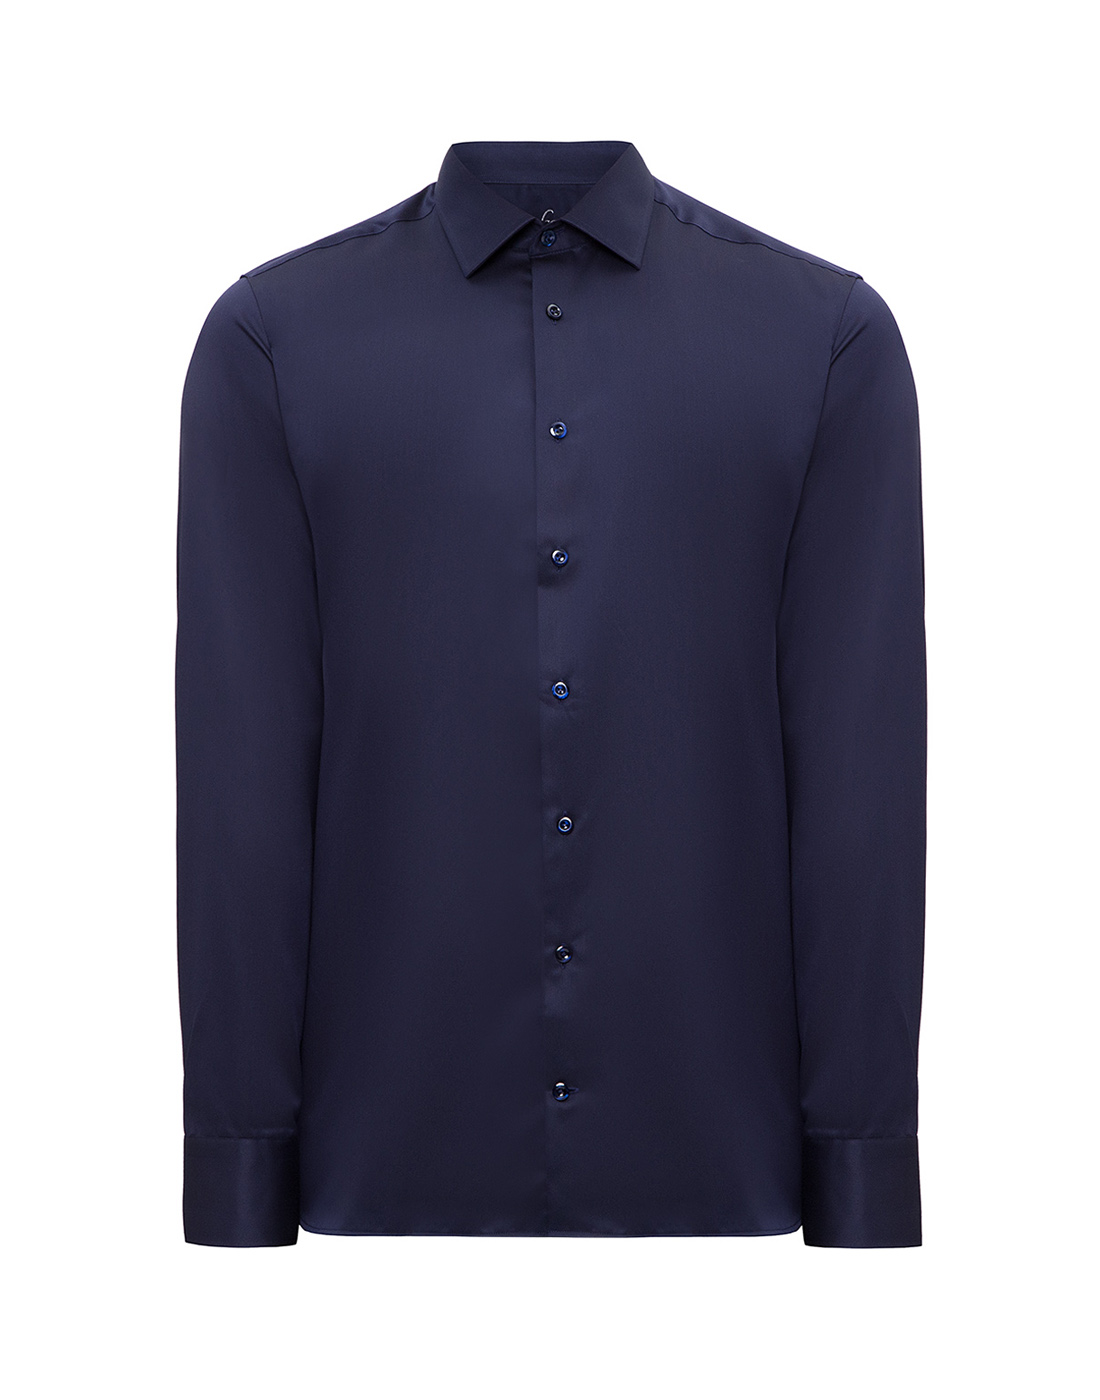 Мужская темно-синяя рубашка Van Laack S132241/790-1